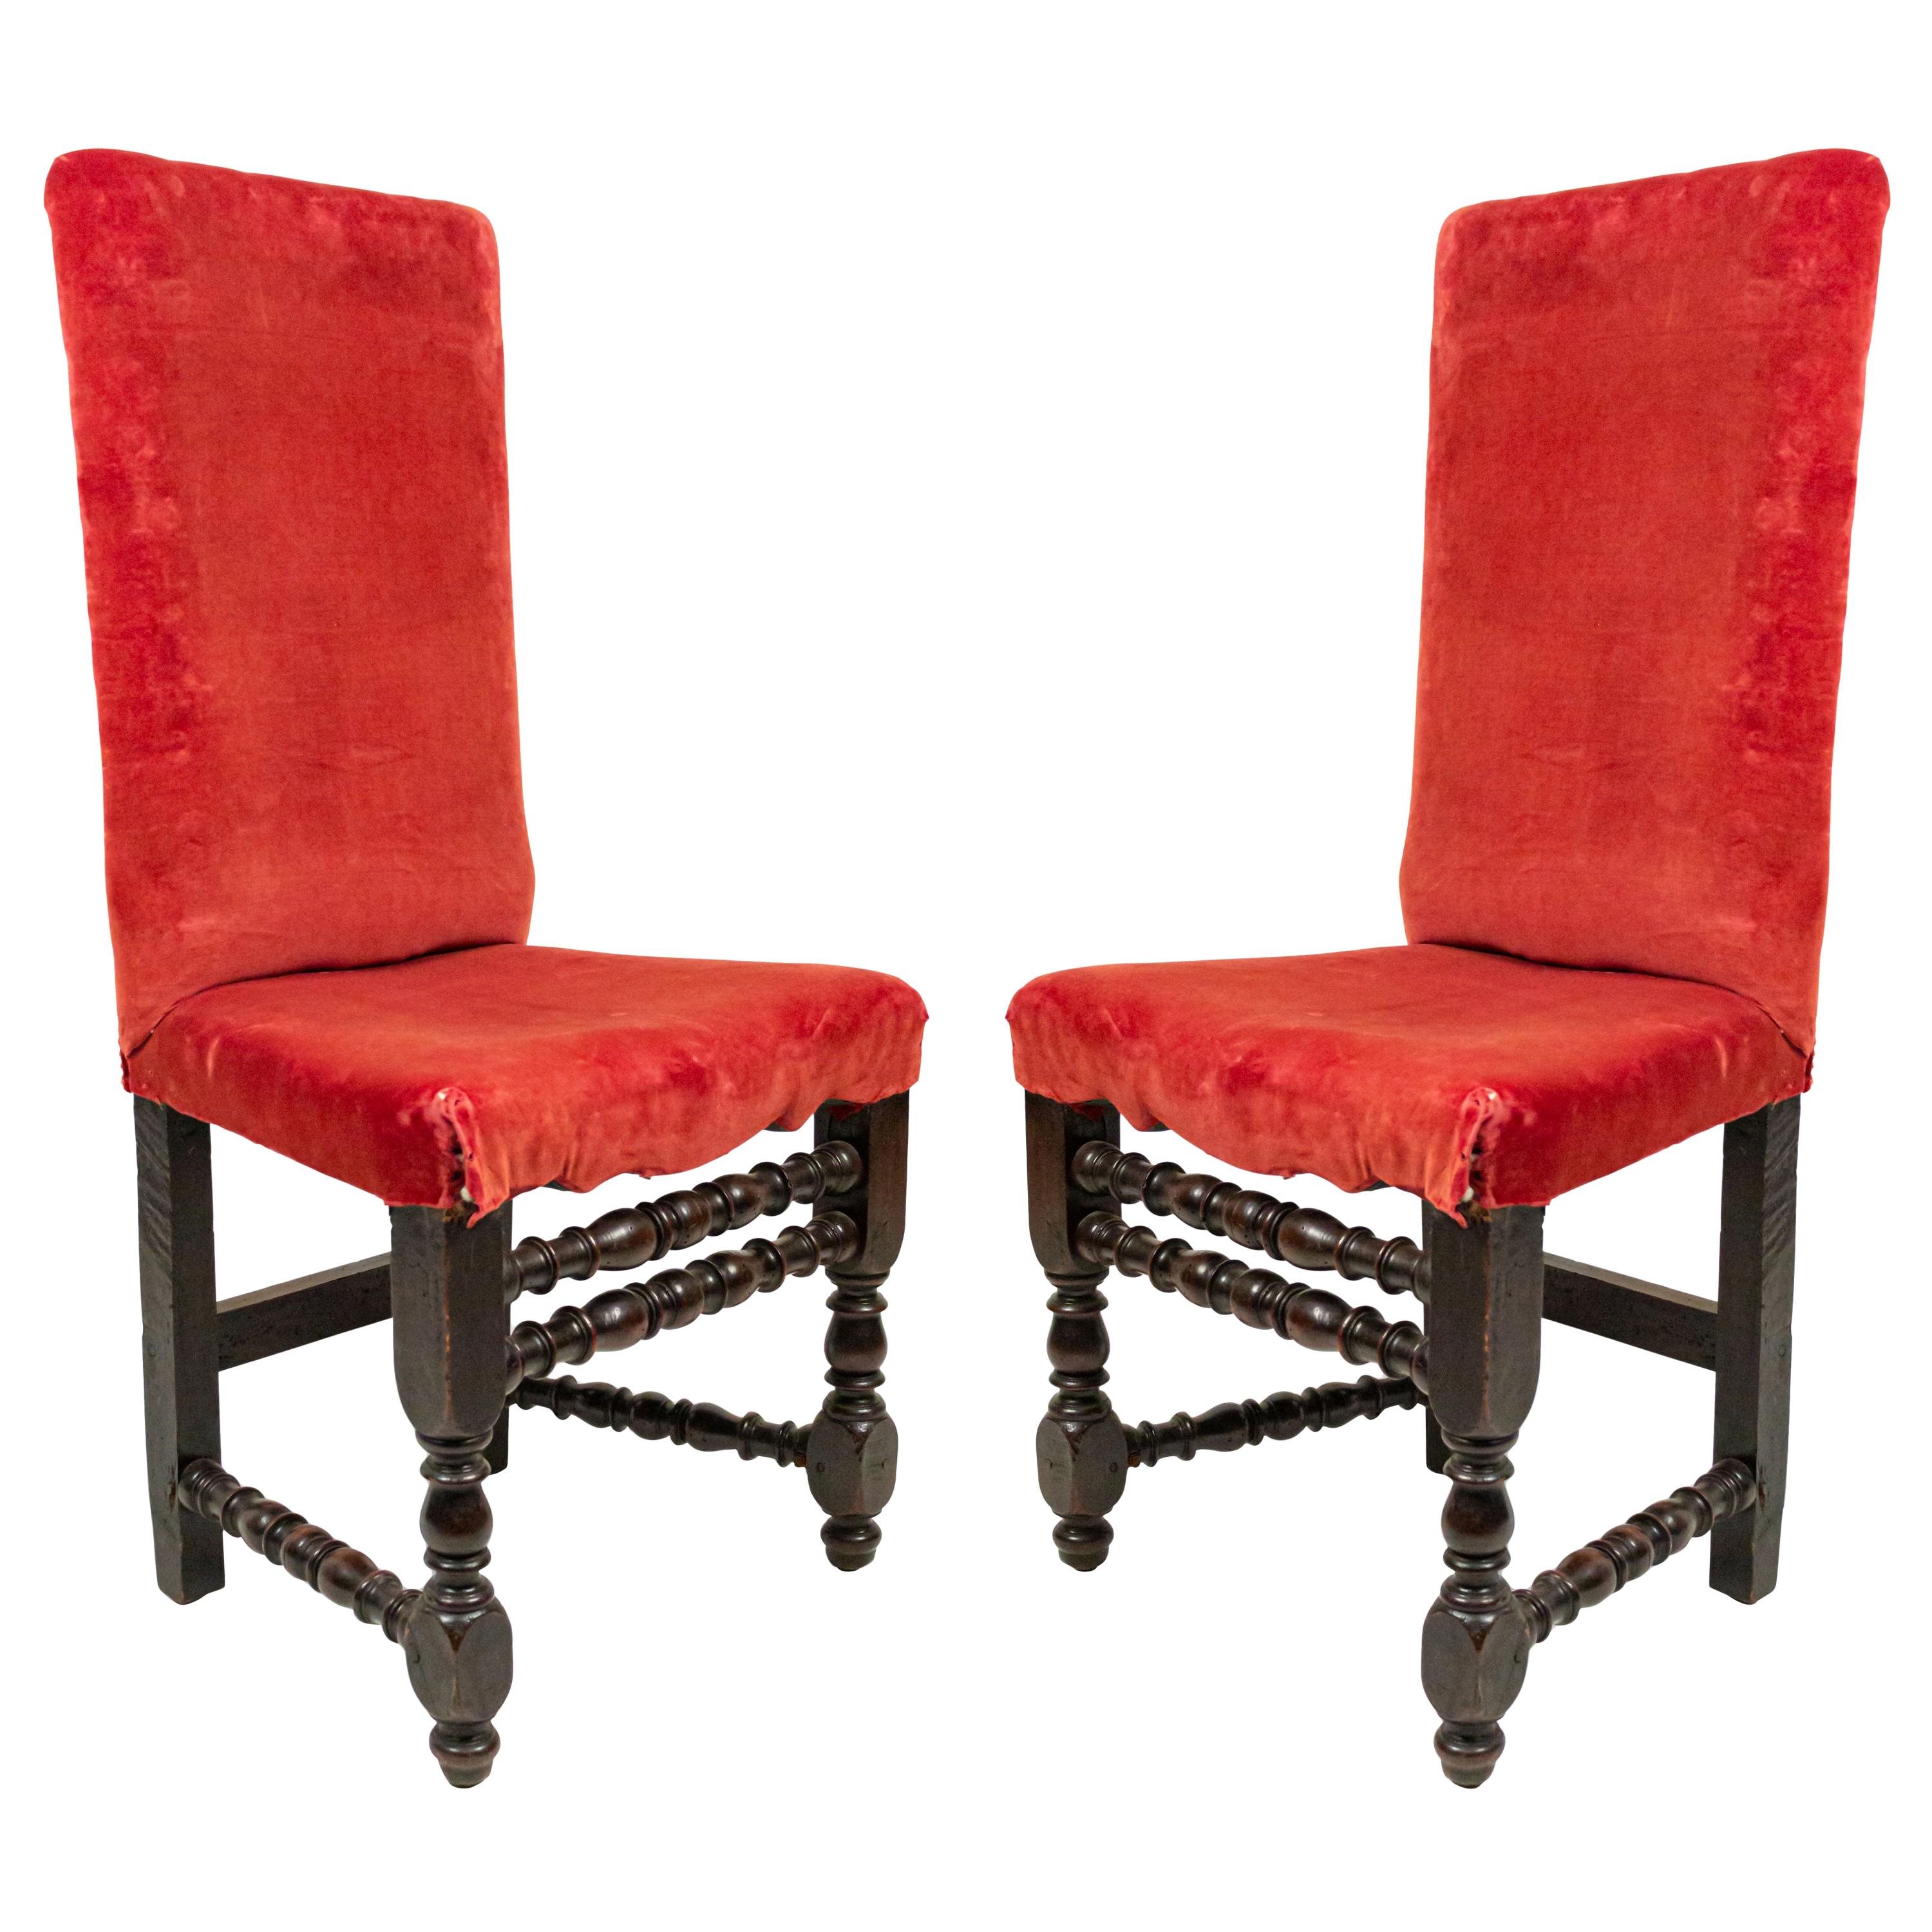 English Renaissance Red Velvet Chairs